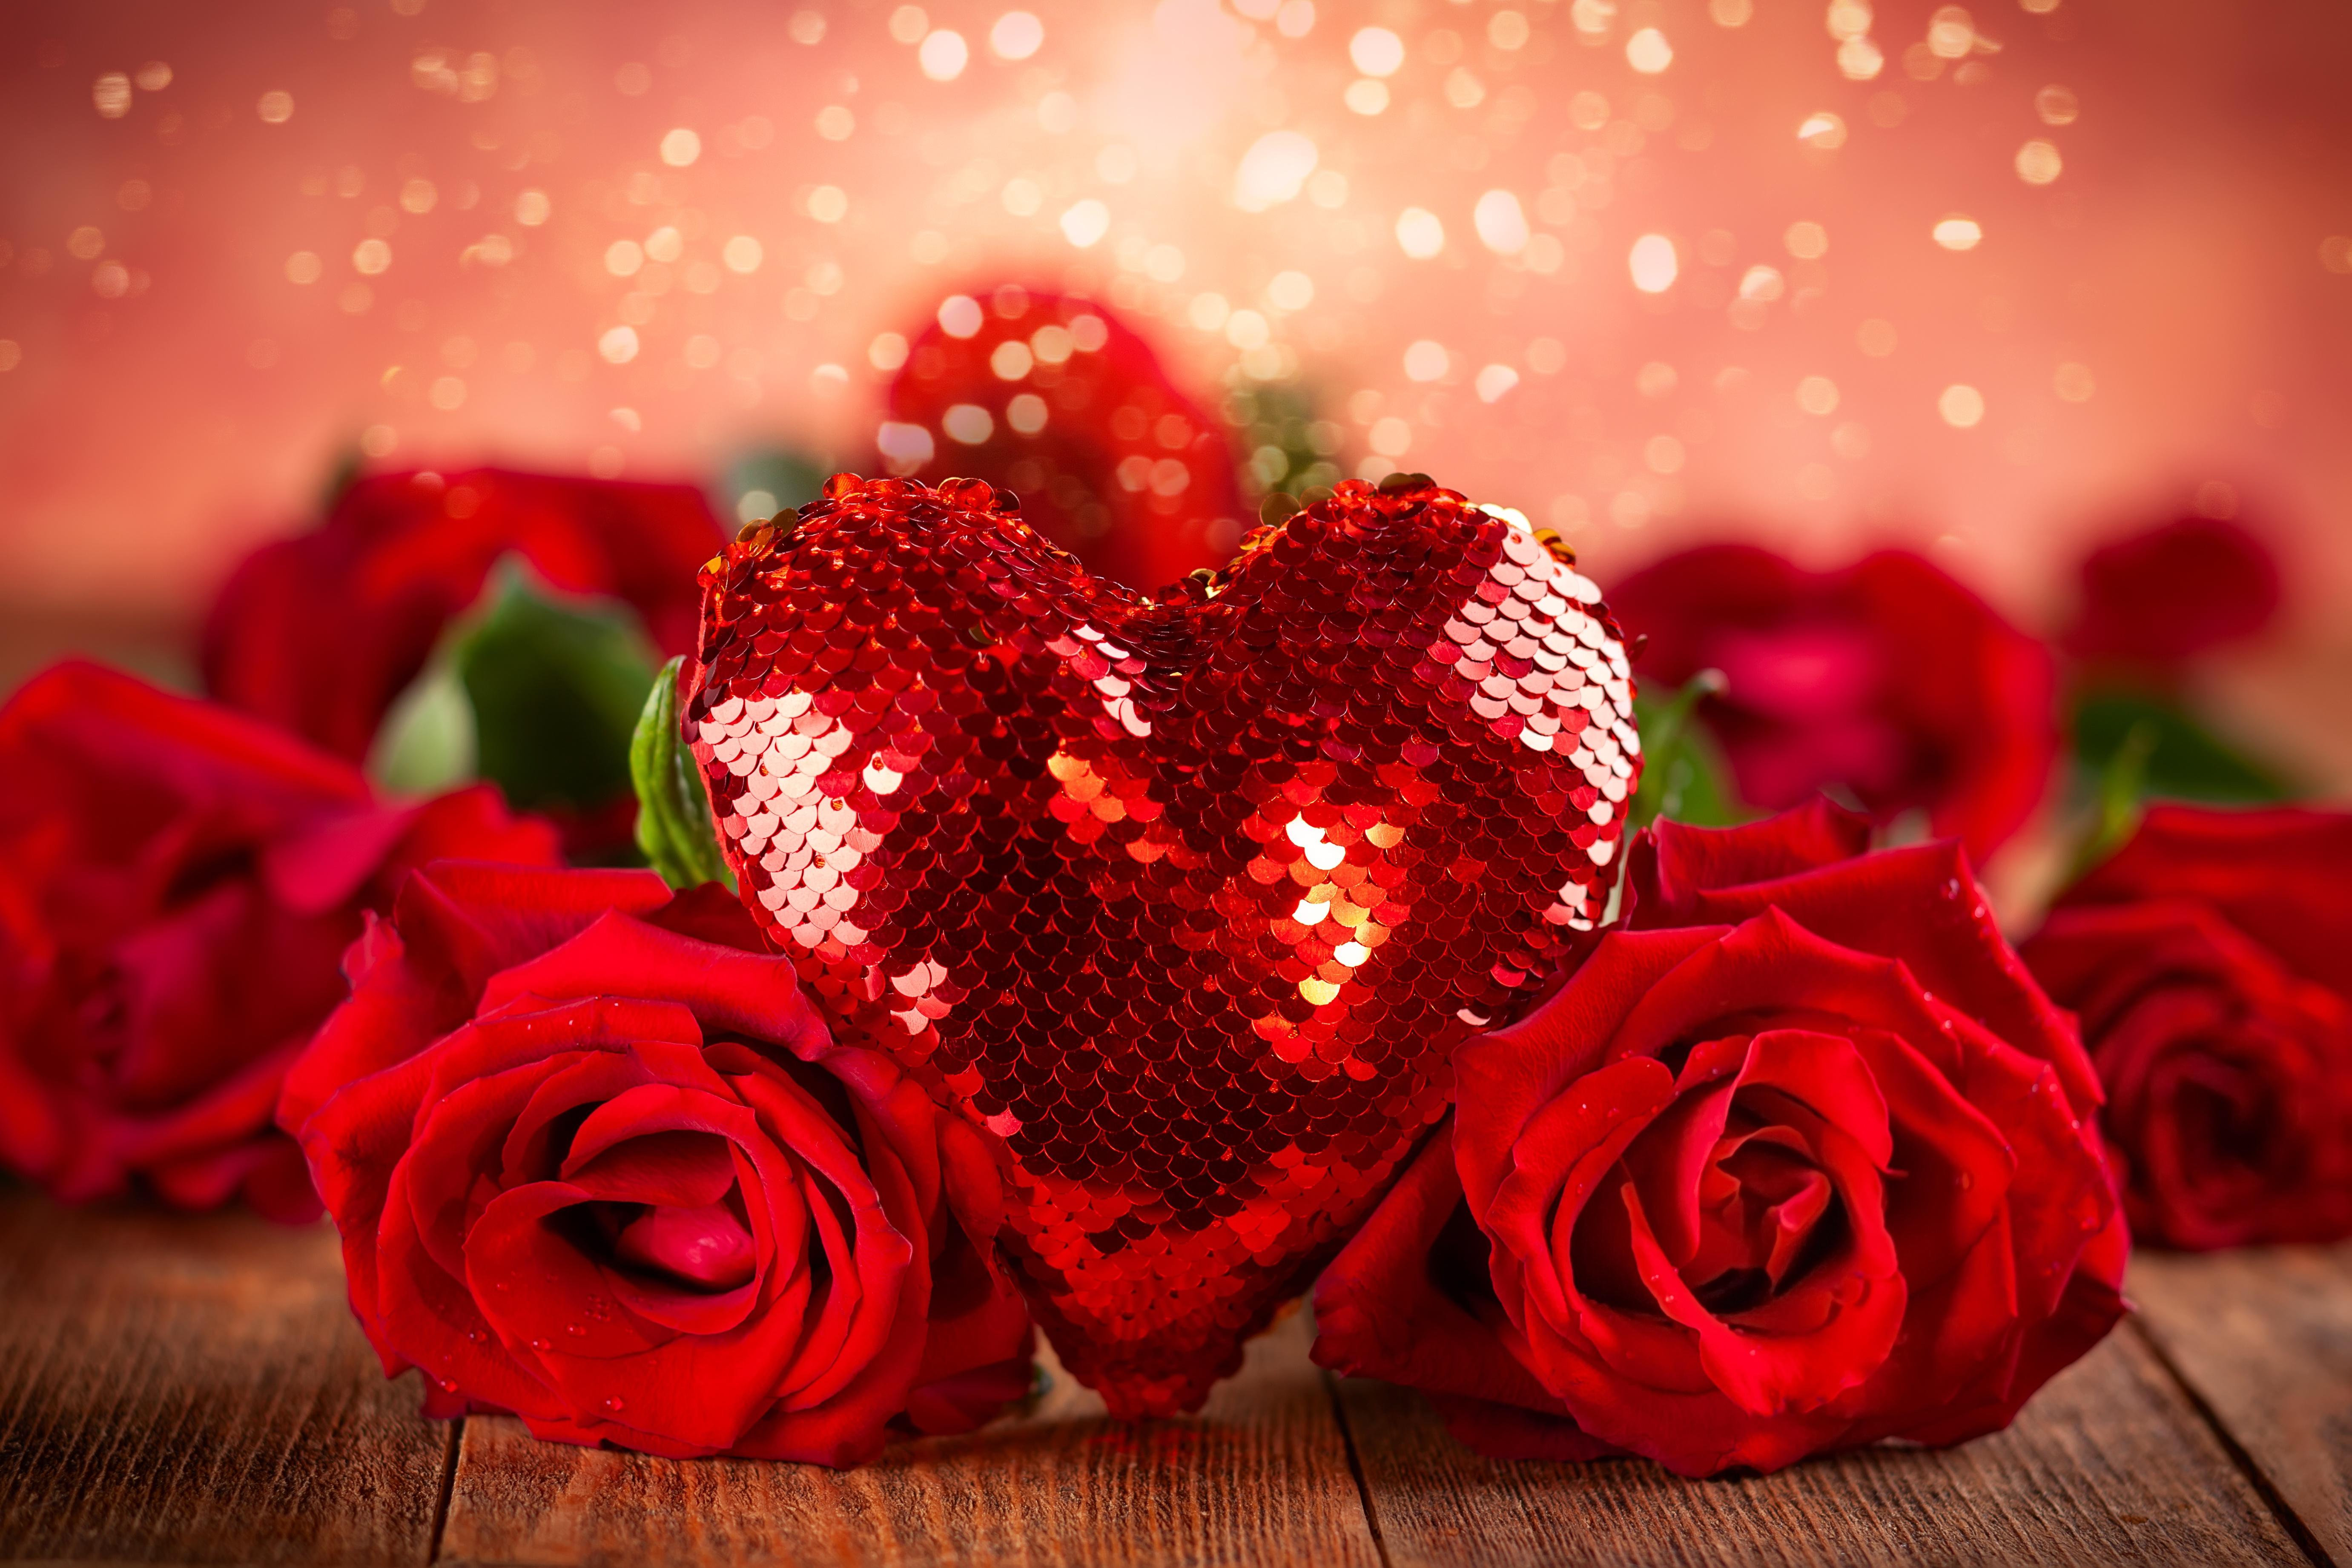 Heart, Rose, Red Rose, Valentines Day, Red Flower, Flower